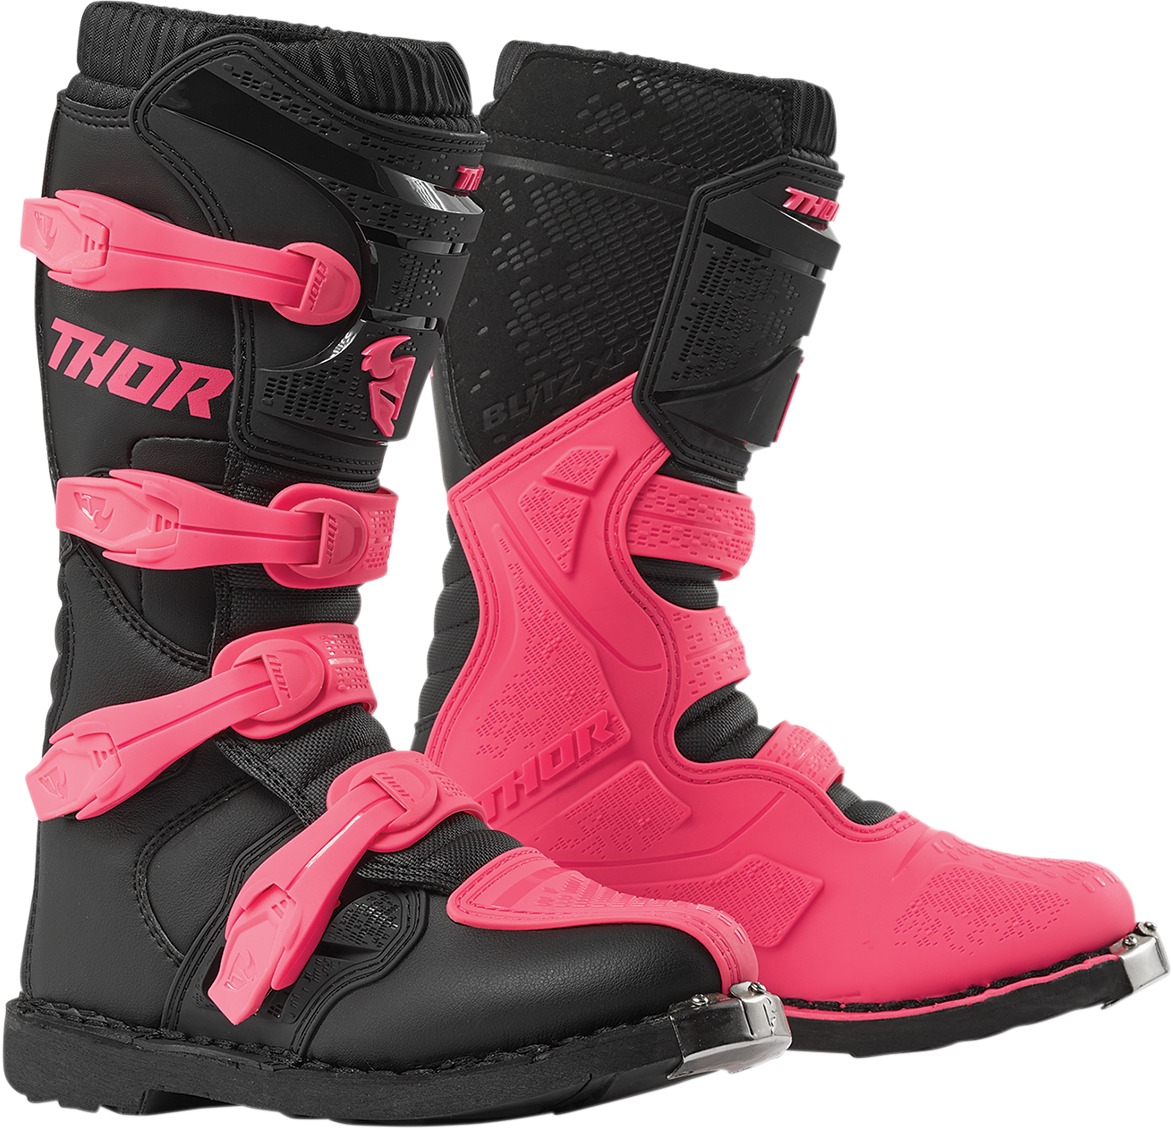 Blitz XP Dirt Bike Boots - Black & Pink Women's Size 8 - Click Image to Close